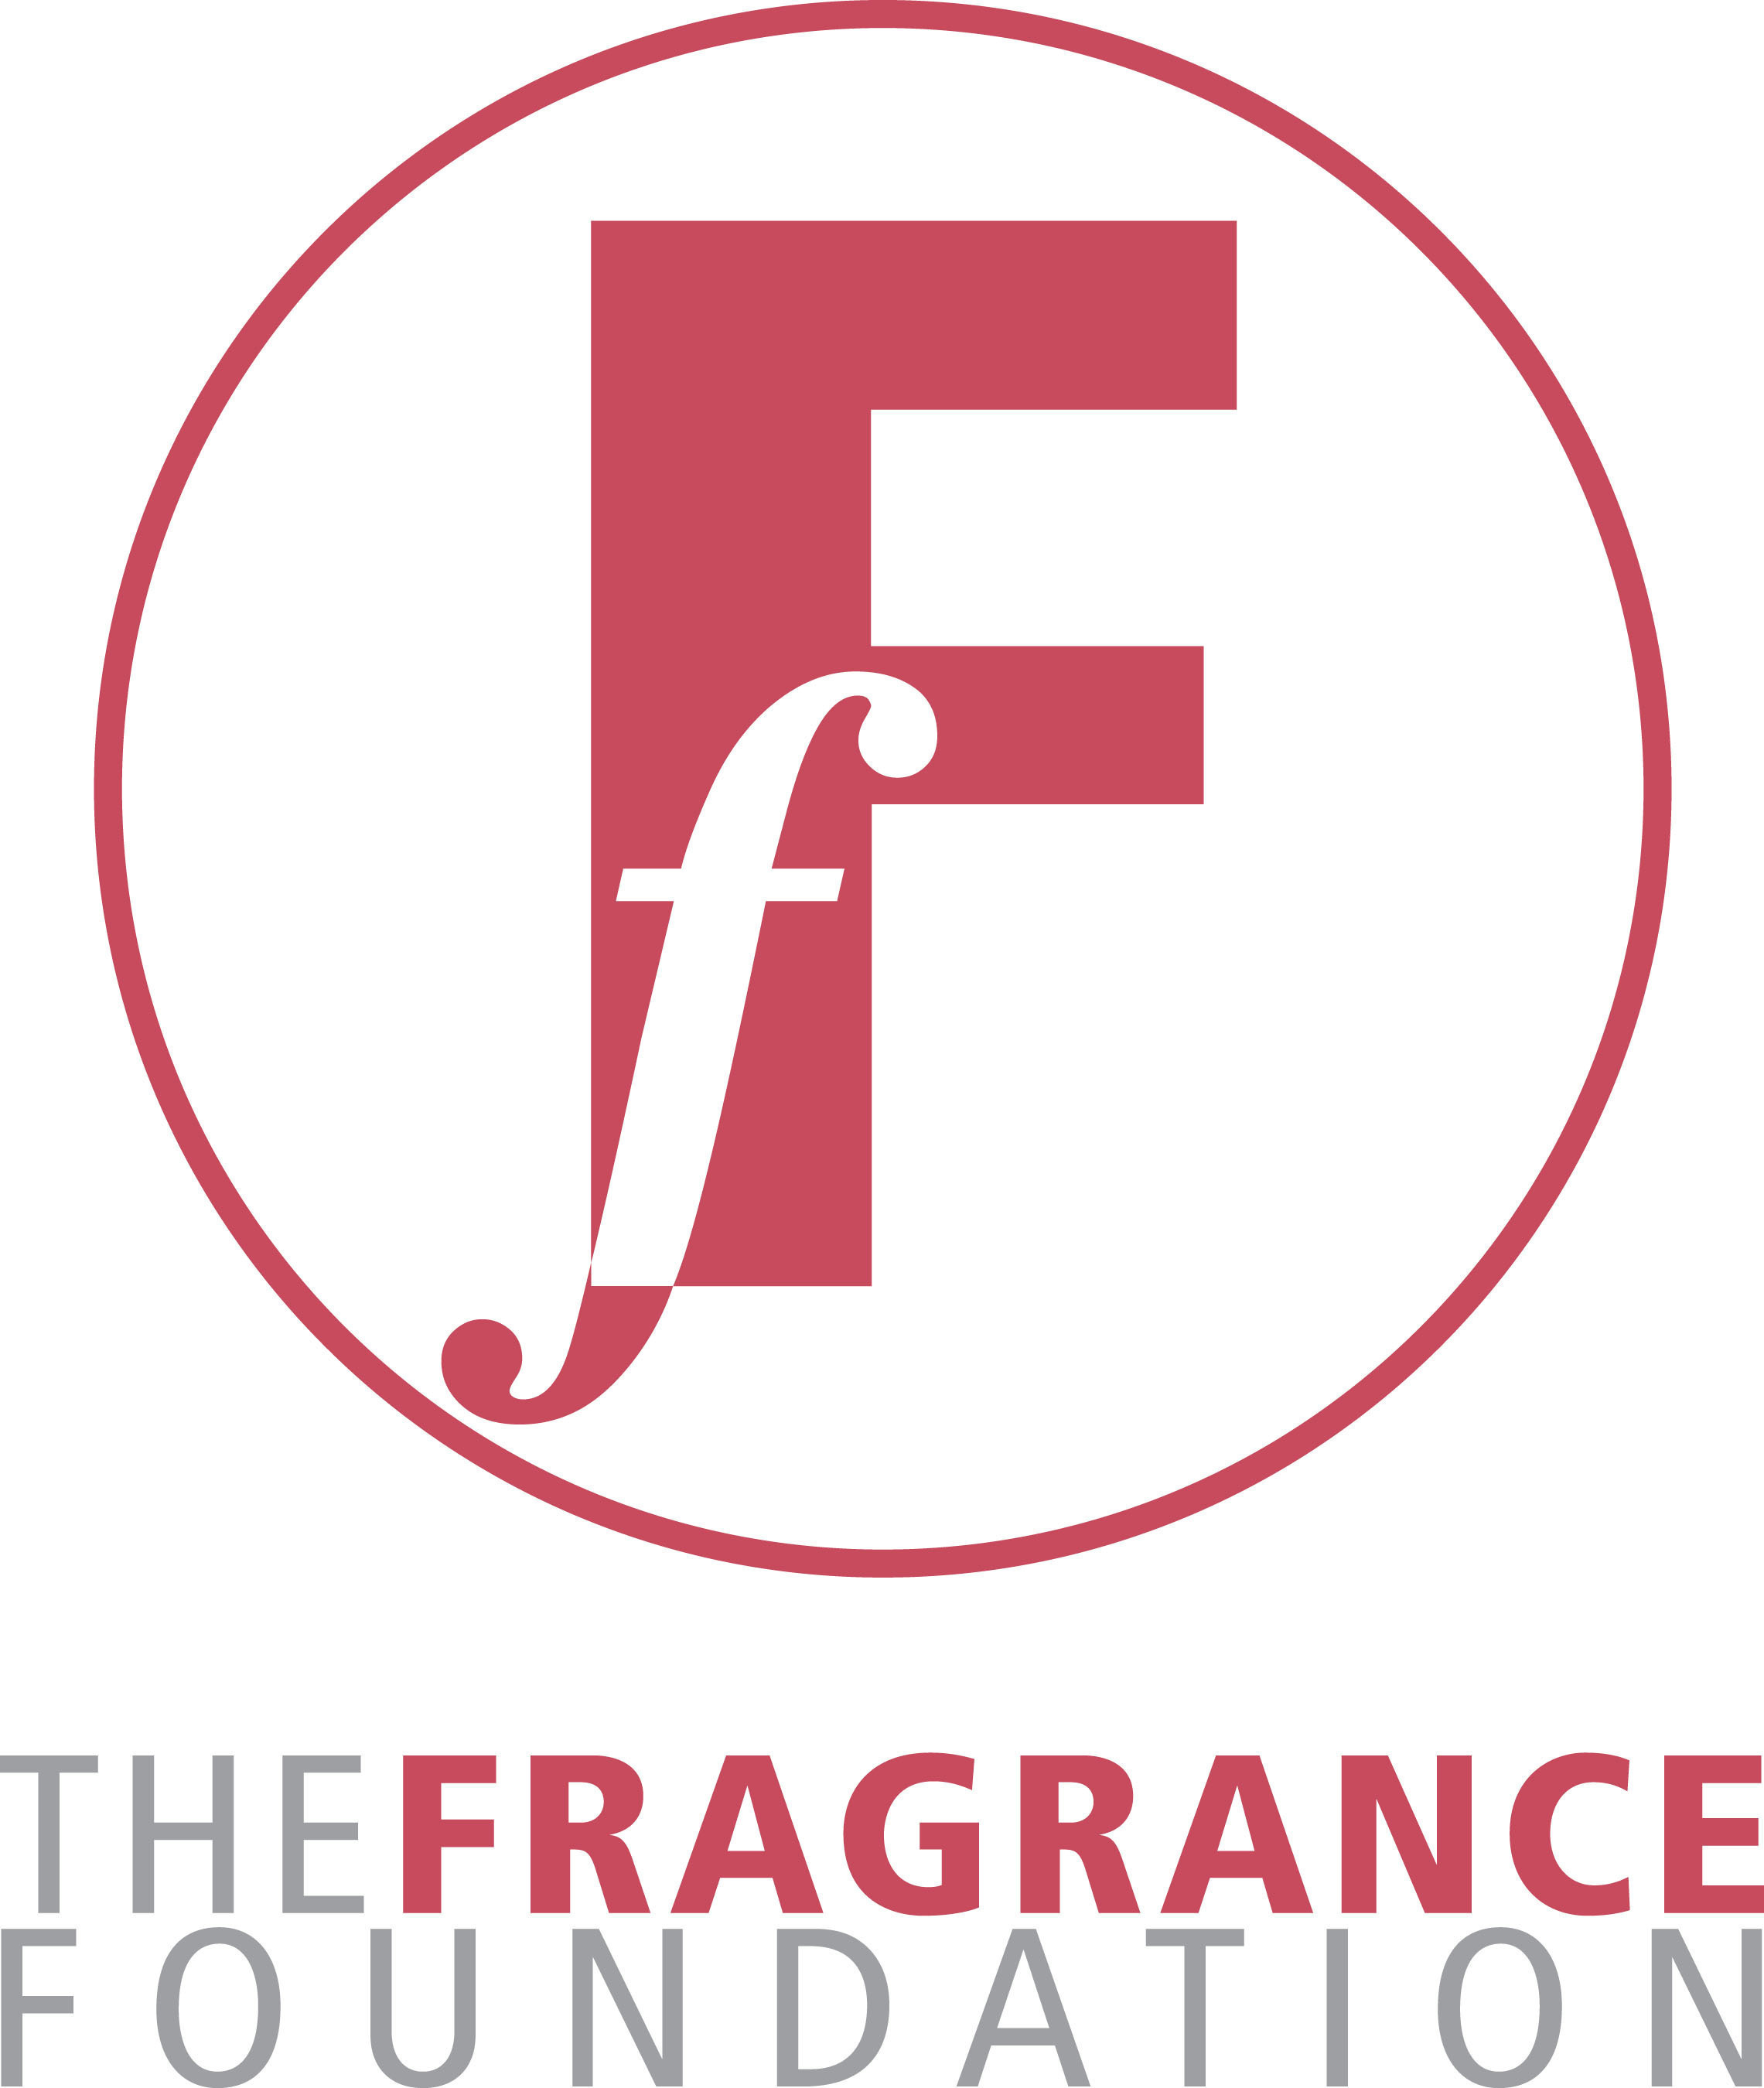 Fifi fragrance awards